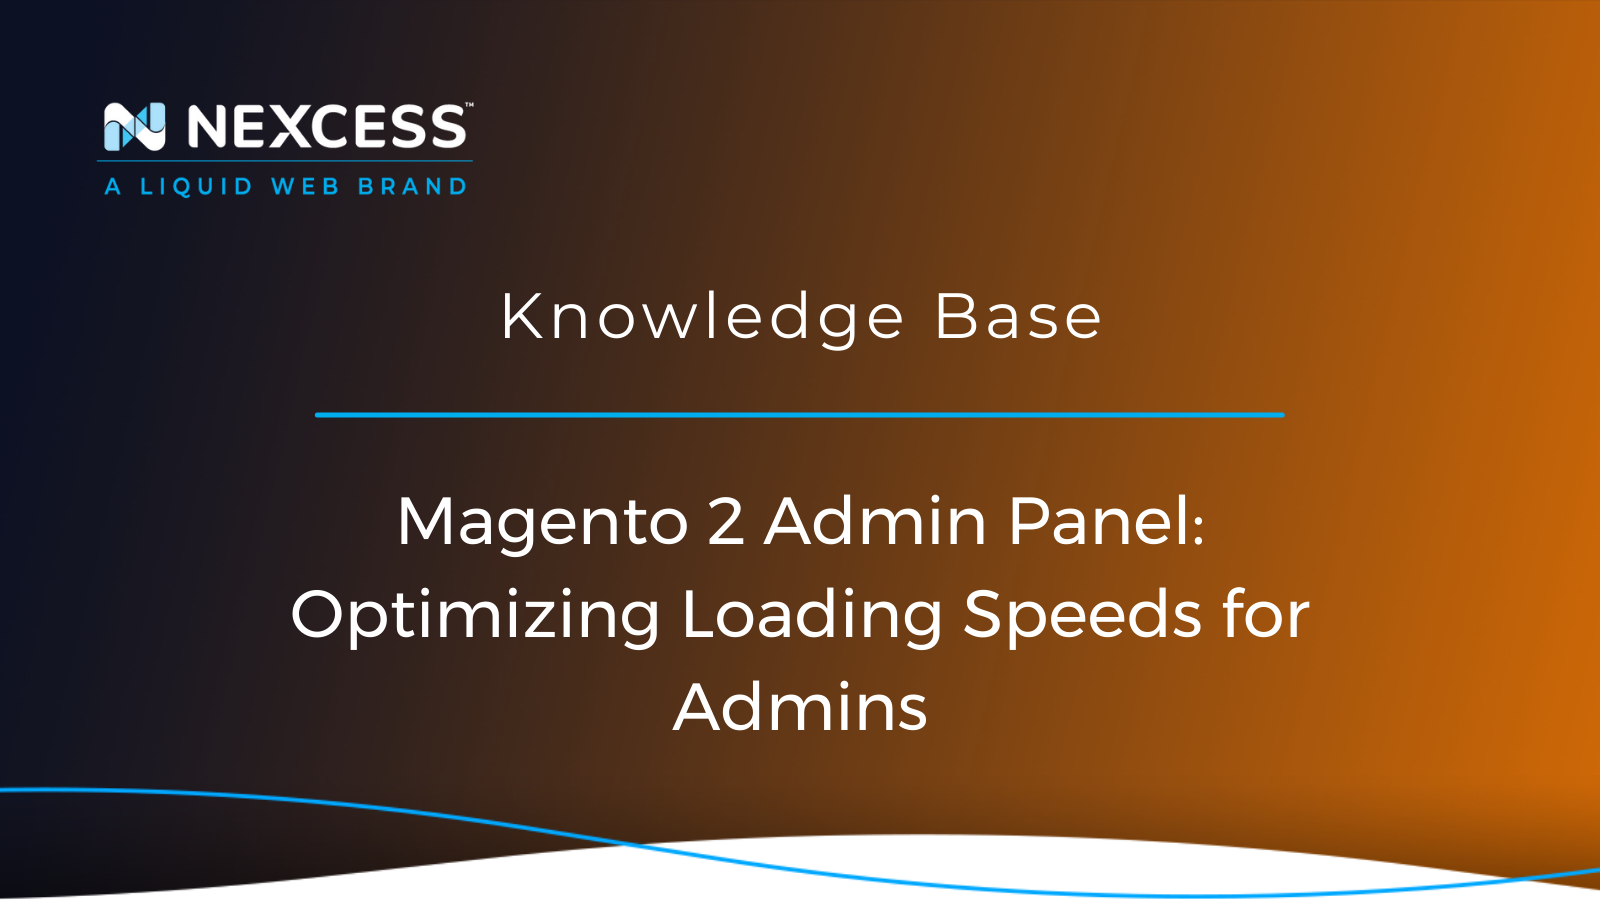 Magento 2 Admin Panel: Optimizing Loading Speeds for Admins